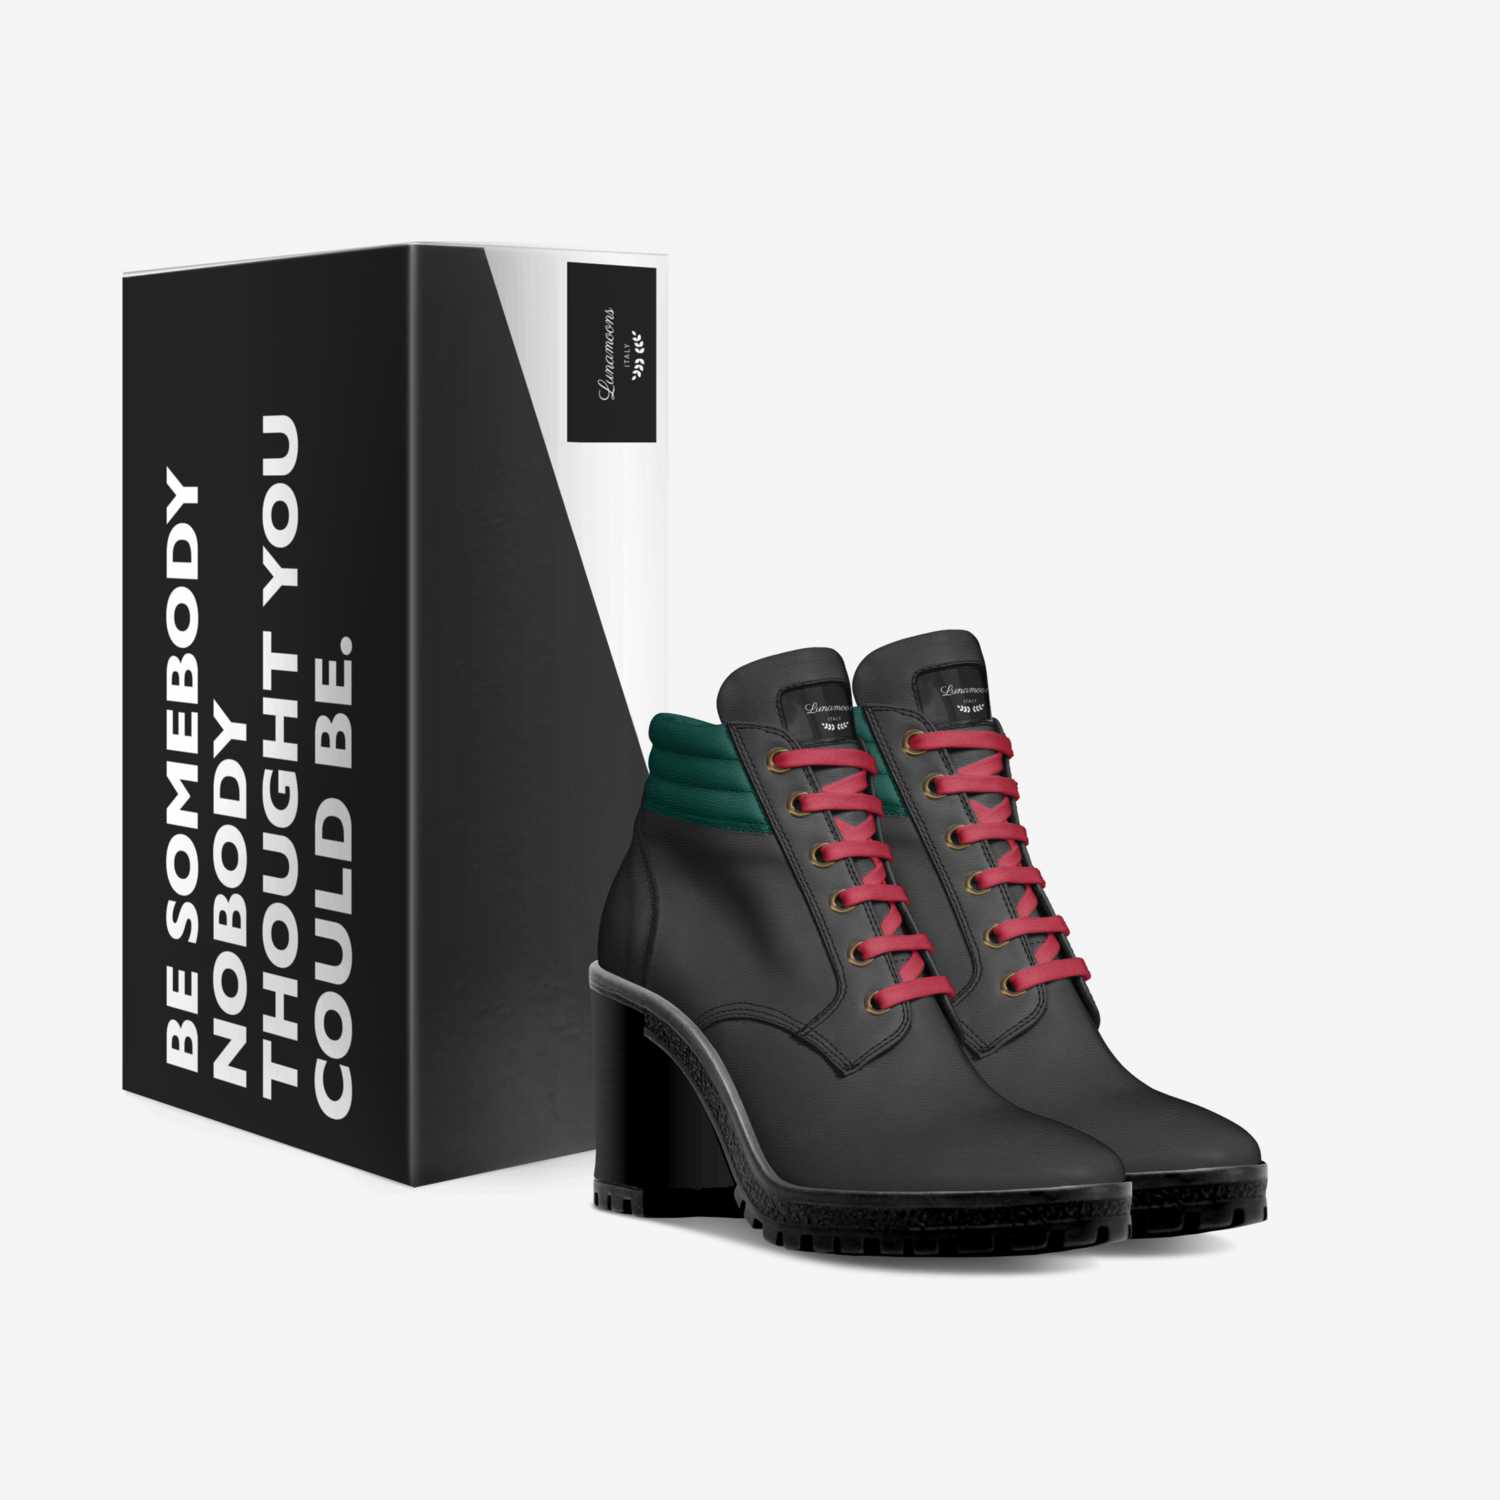 Lunamoons custom made in Italy shoes by Gabriella A Thomas | Box view